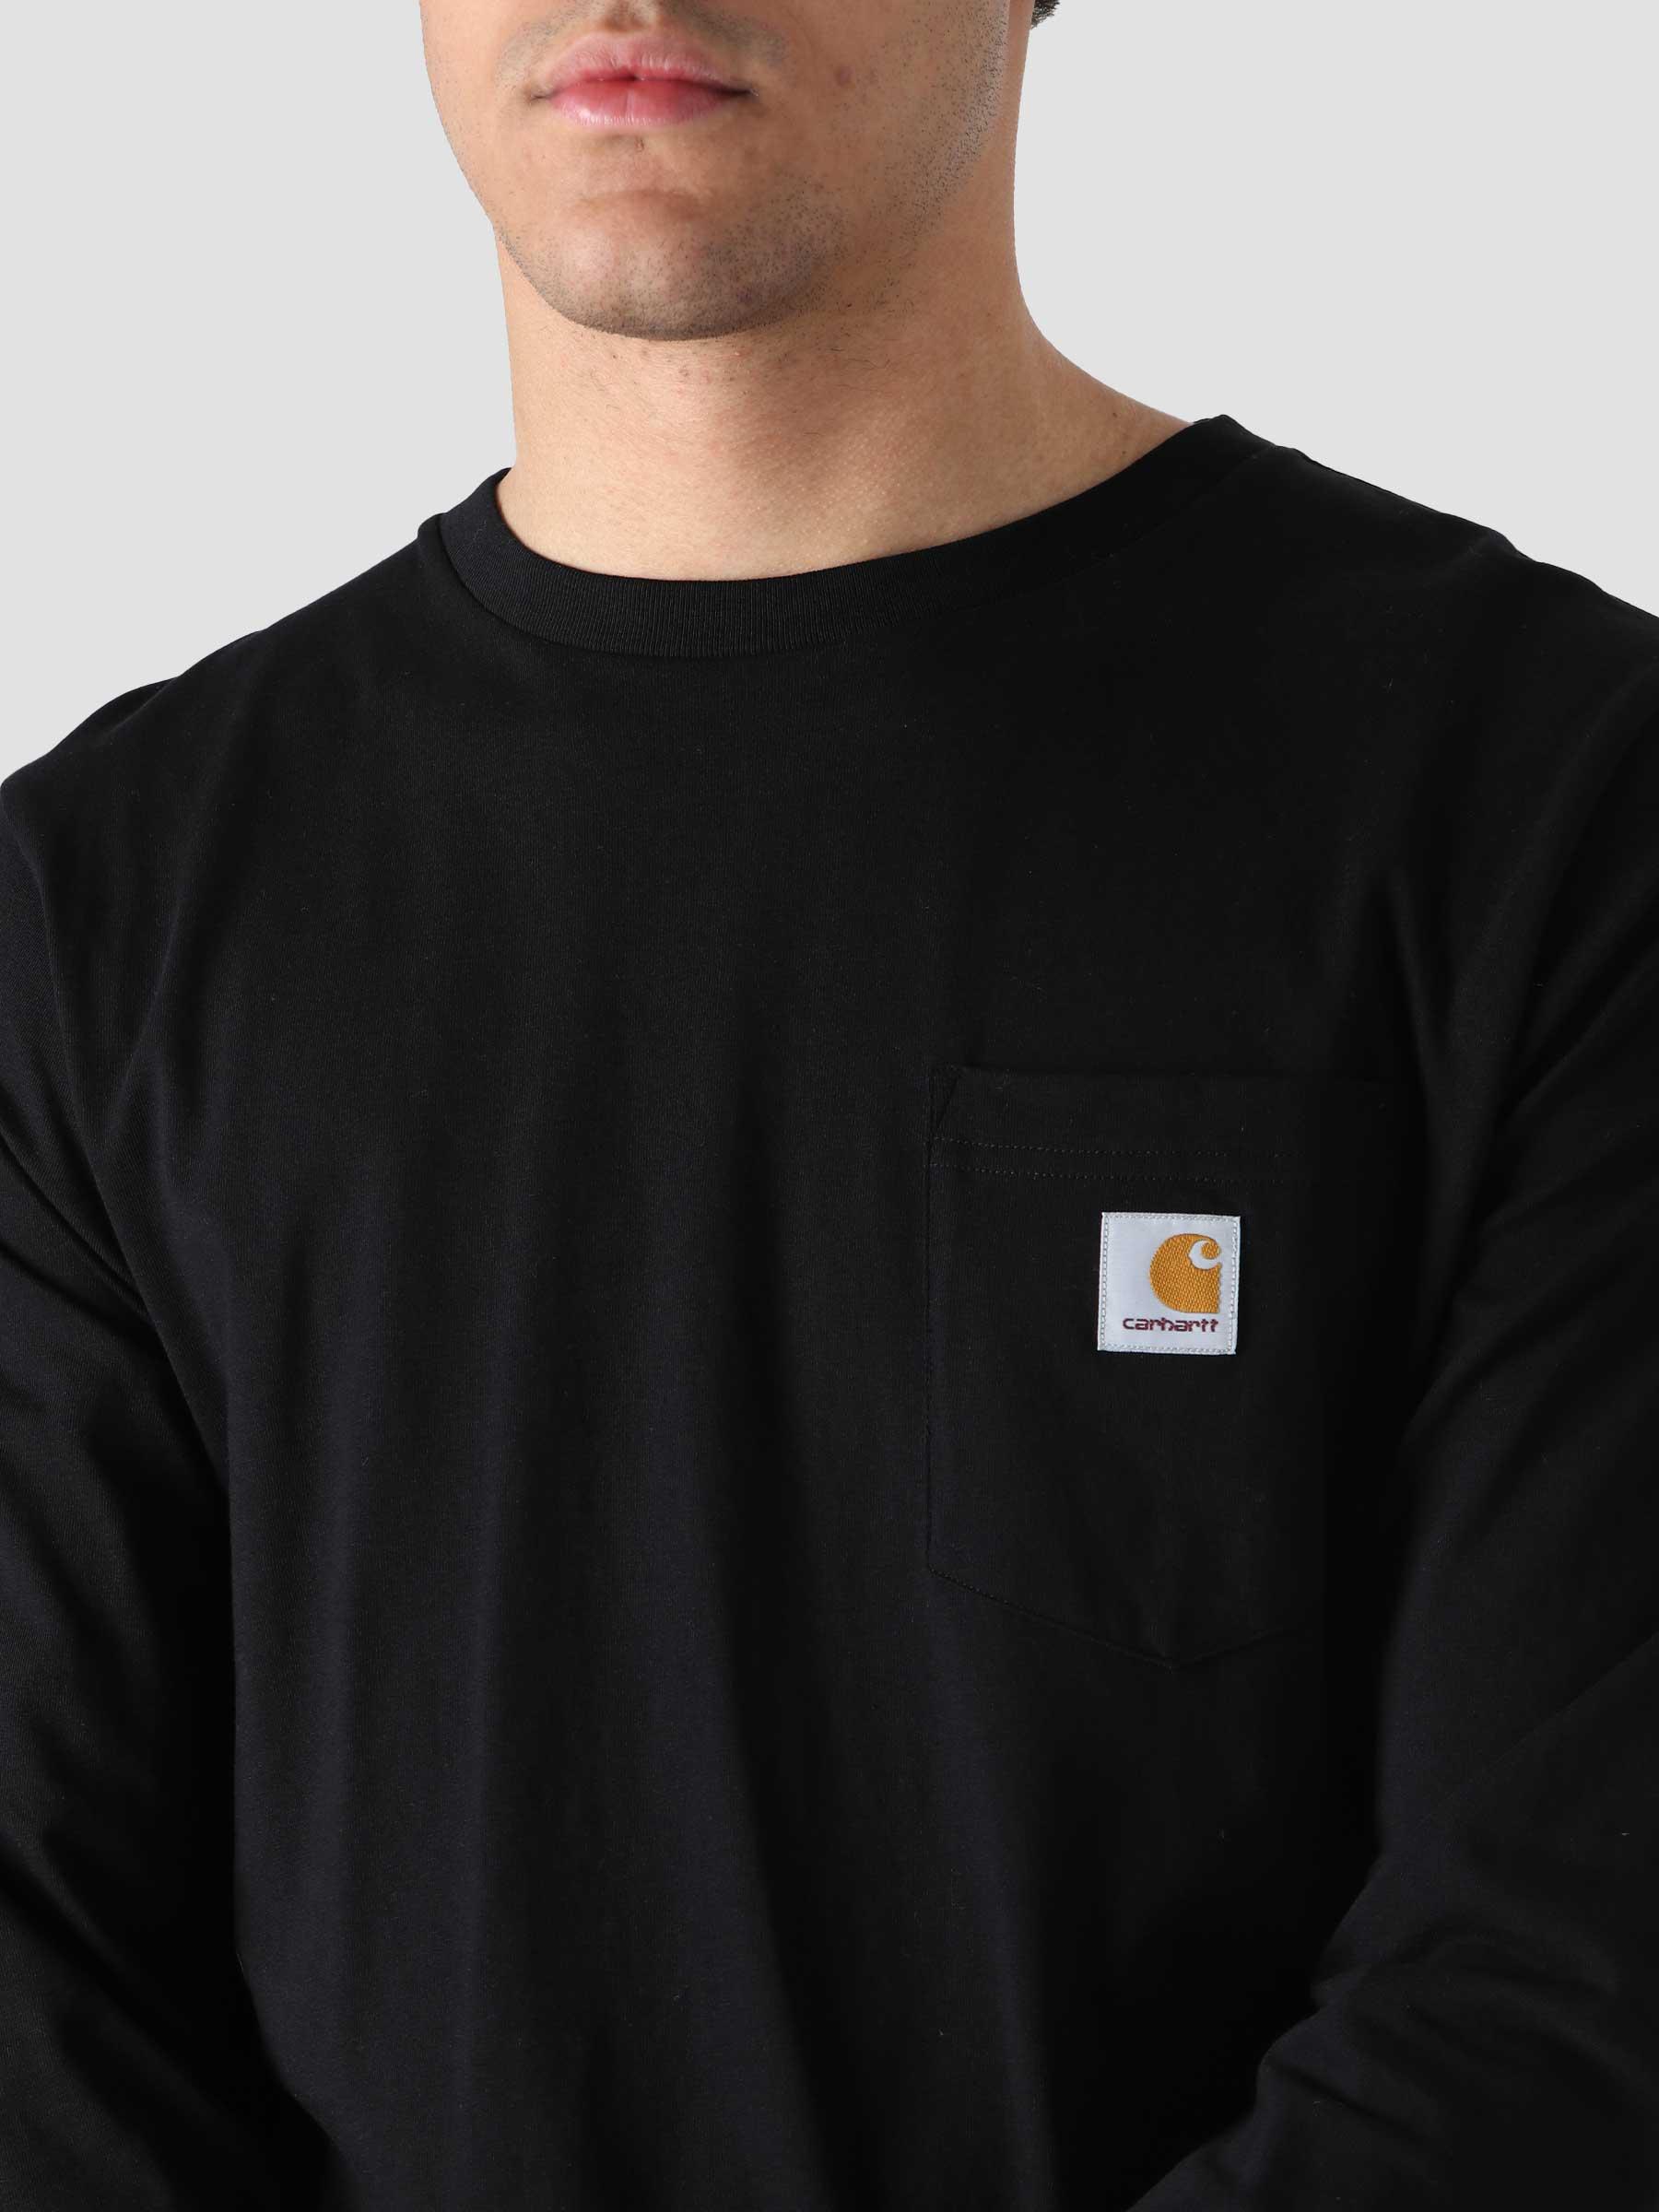 Carhartt WIP Pocket T-Shirt Black - Freshcotton